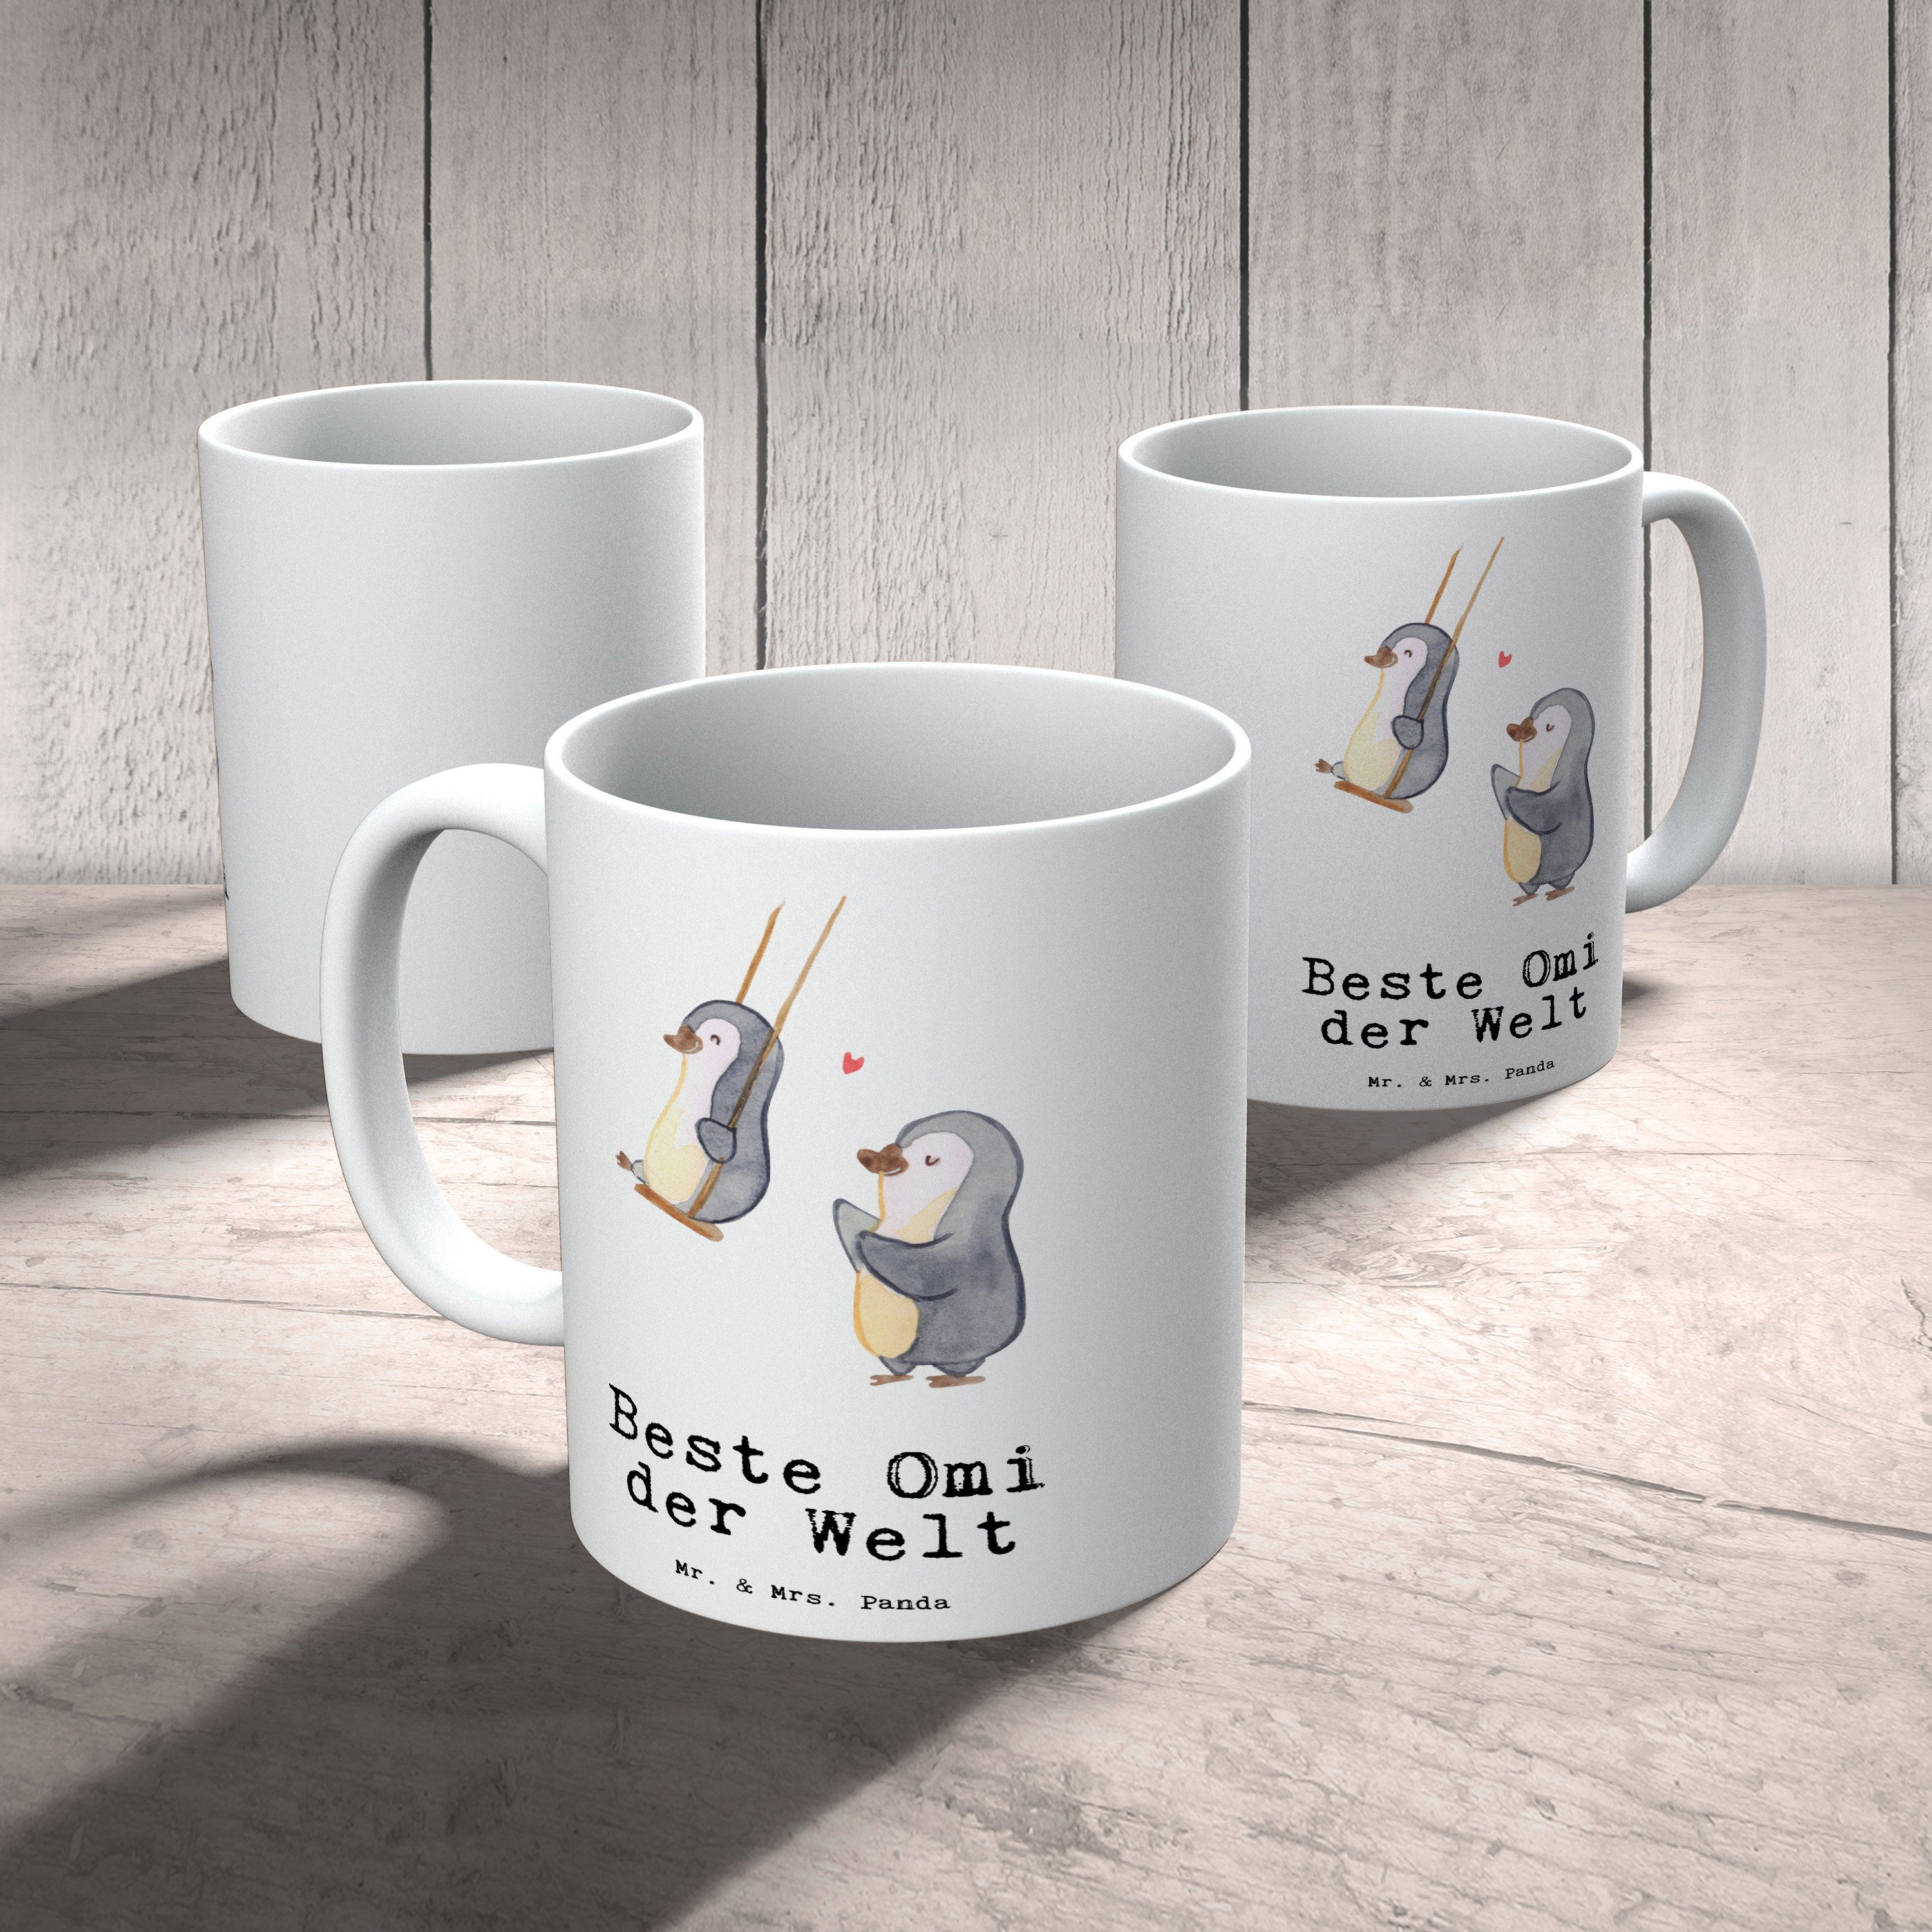 Mr. & Büro, machen, - Keramik Weiß Pinguin Tasse Geschenk, der Panda Welt Mitbringsel, Mrs. Danke, Geschenktipp, Geburtstagsgeschenk, - Beste Omi Kaffeetasse, Freude Ommi, Enkelin